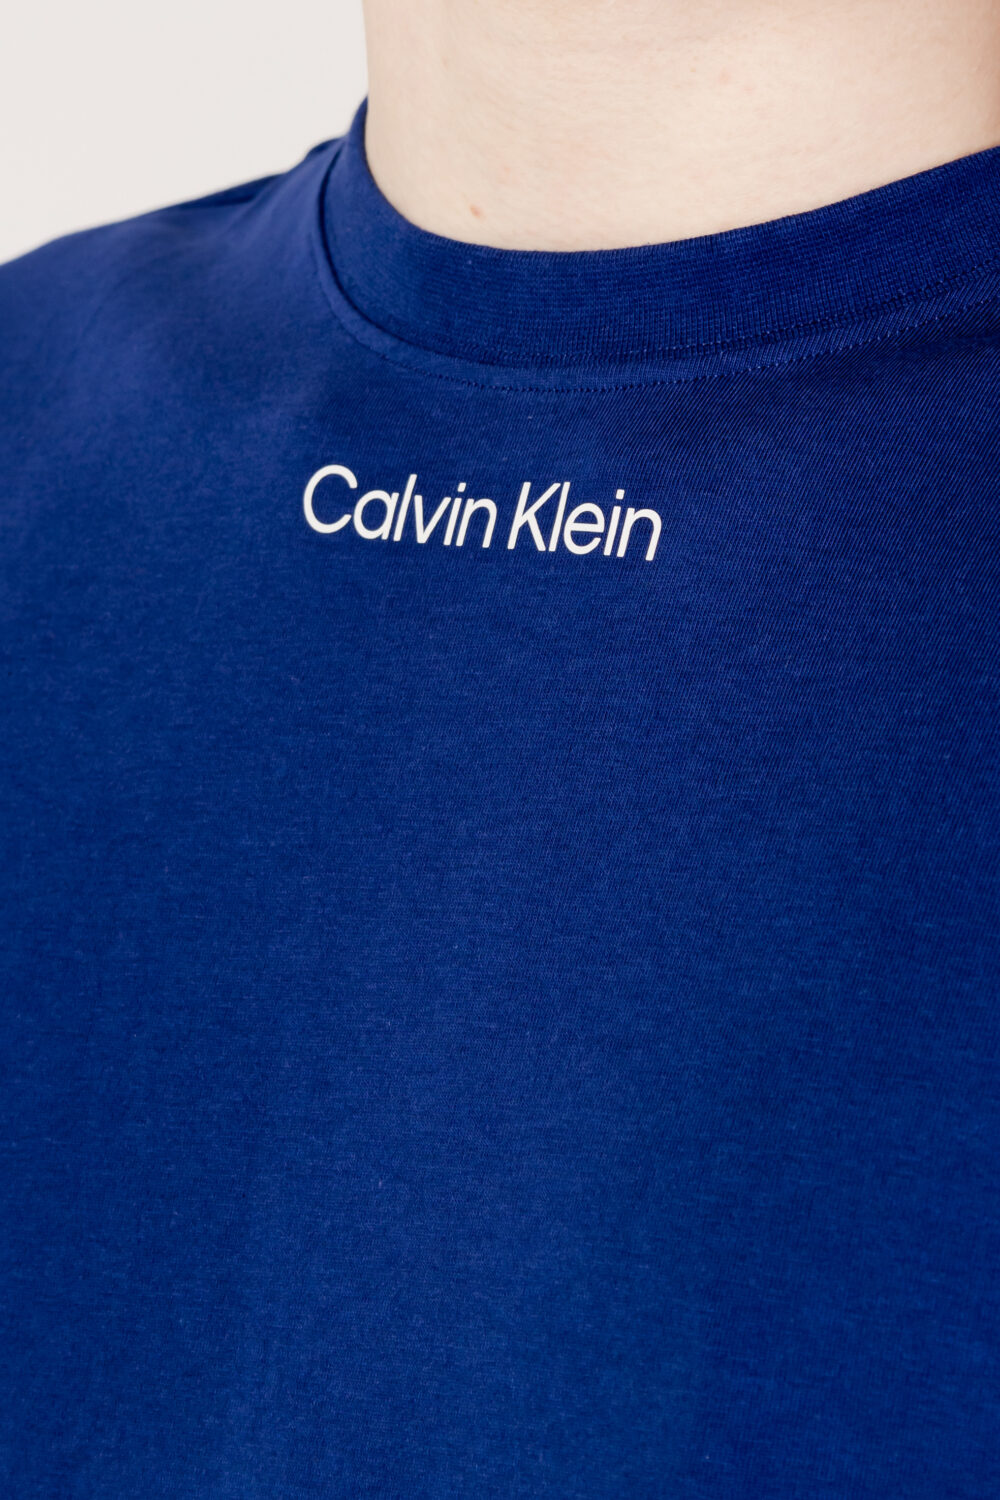 T-shirt Calvin Klein Sport PW - S/S Blu - Foto 2